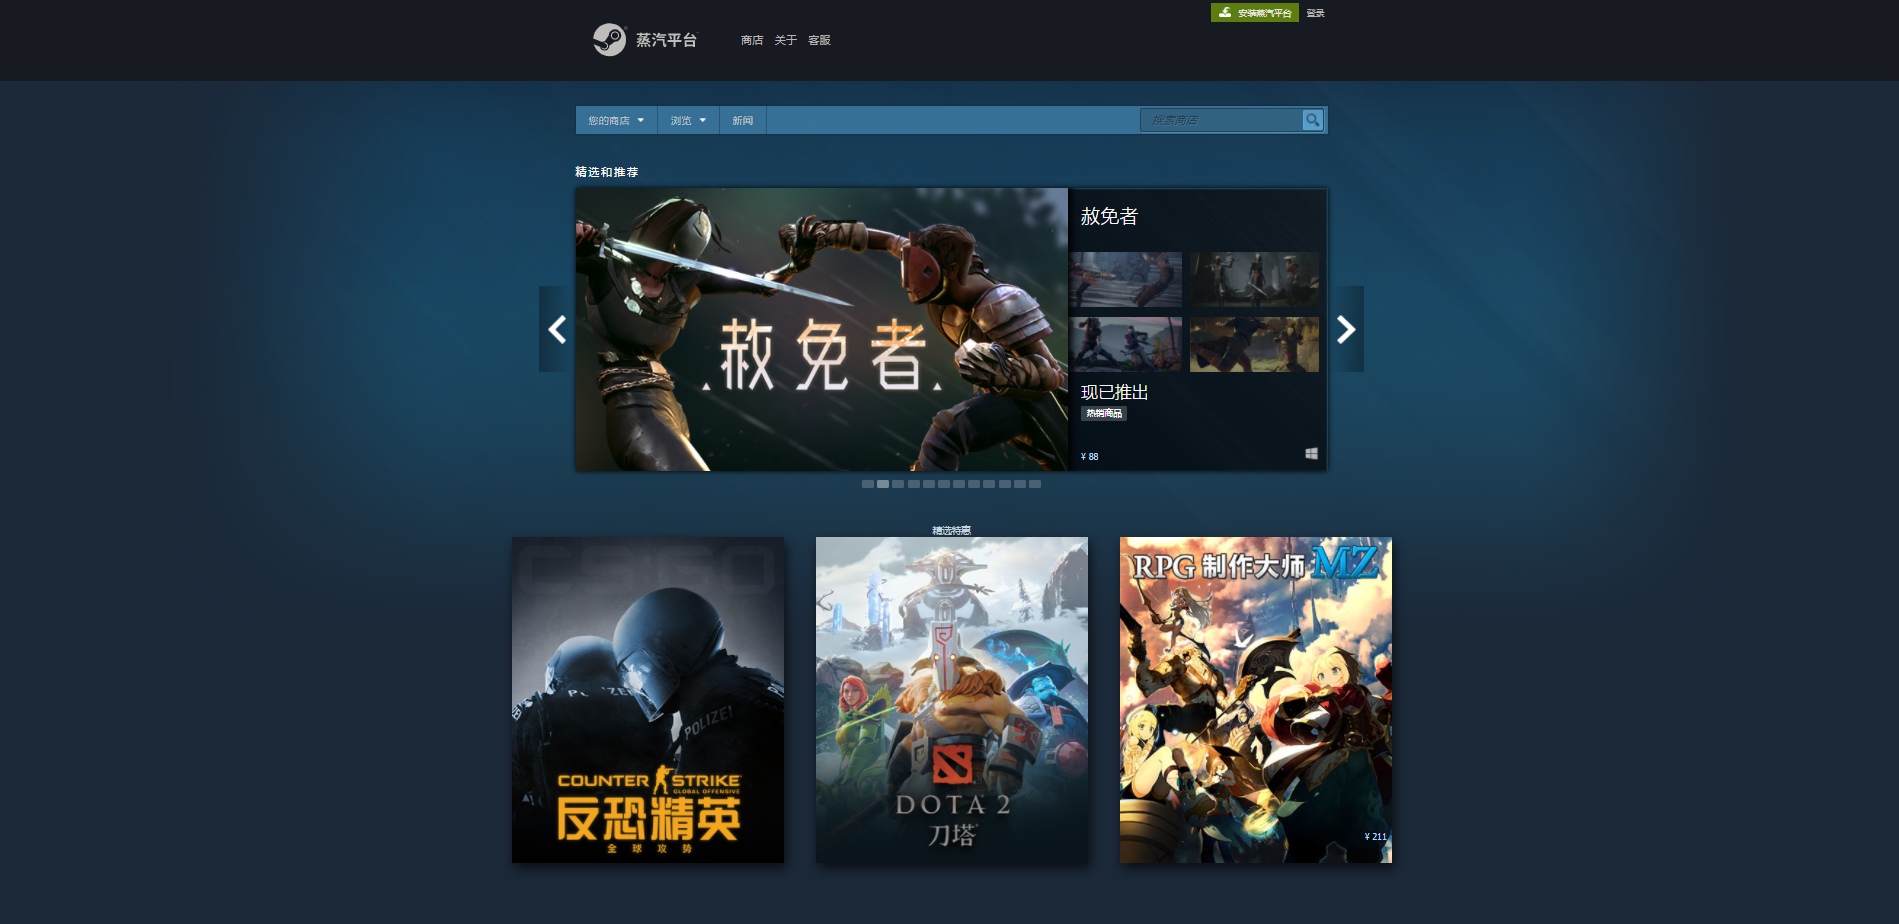 Steam добрался и до Китая